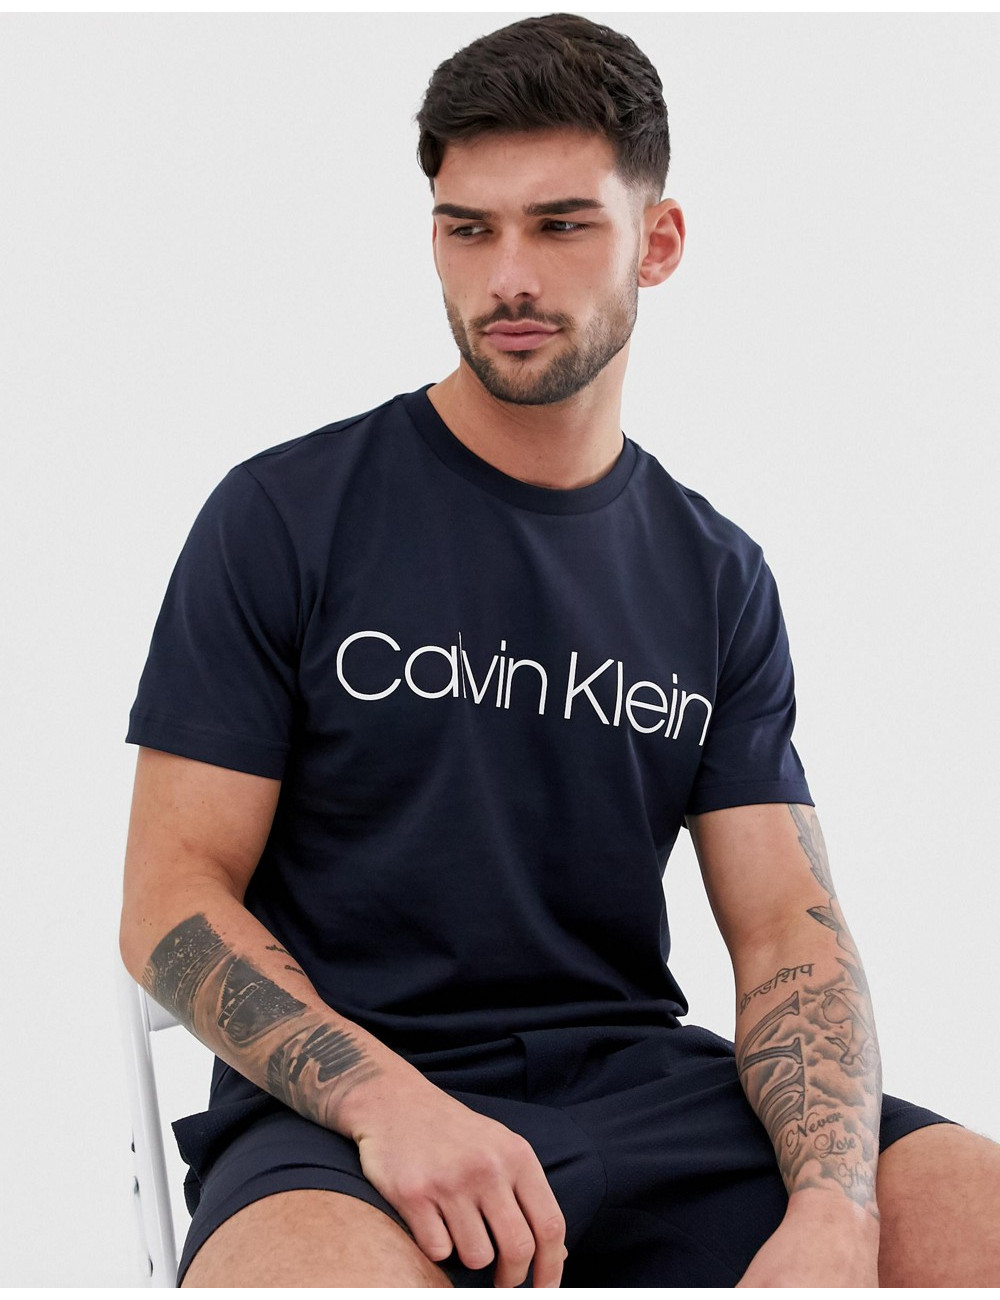 Calvin Klein logo t-shirt...